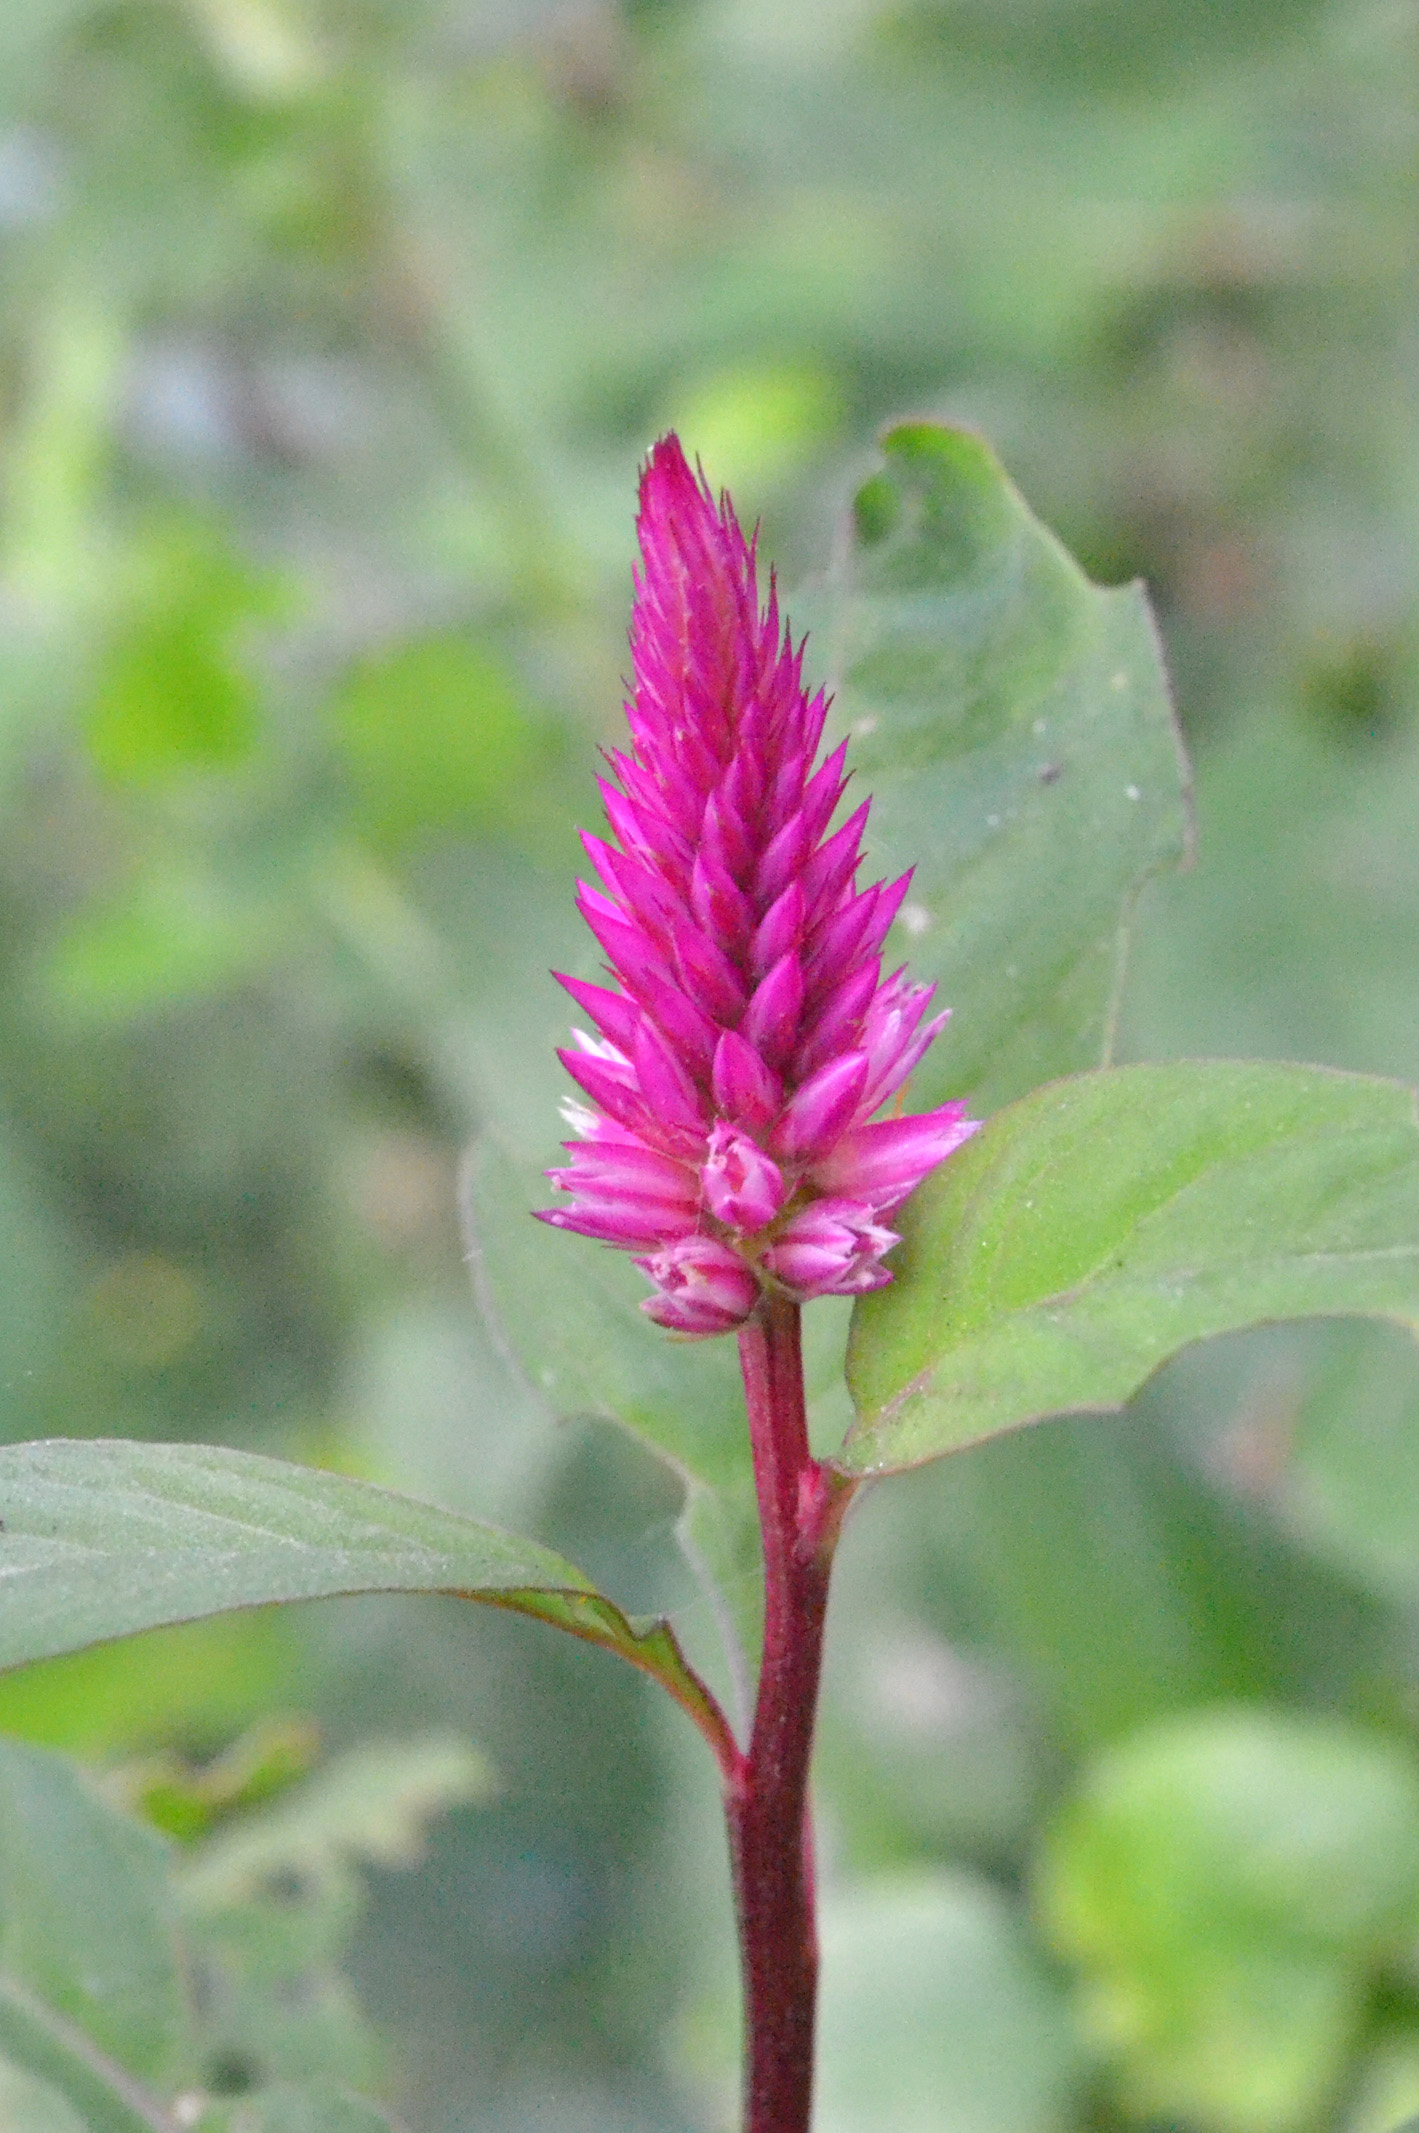 File:The pink flower-Tamil Nadu.JPG - Wikimedia Commons